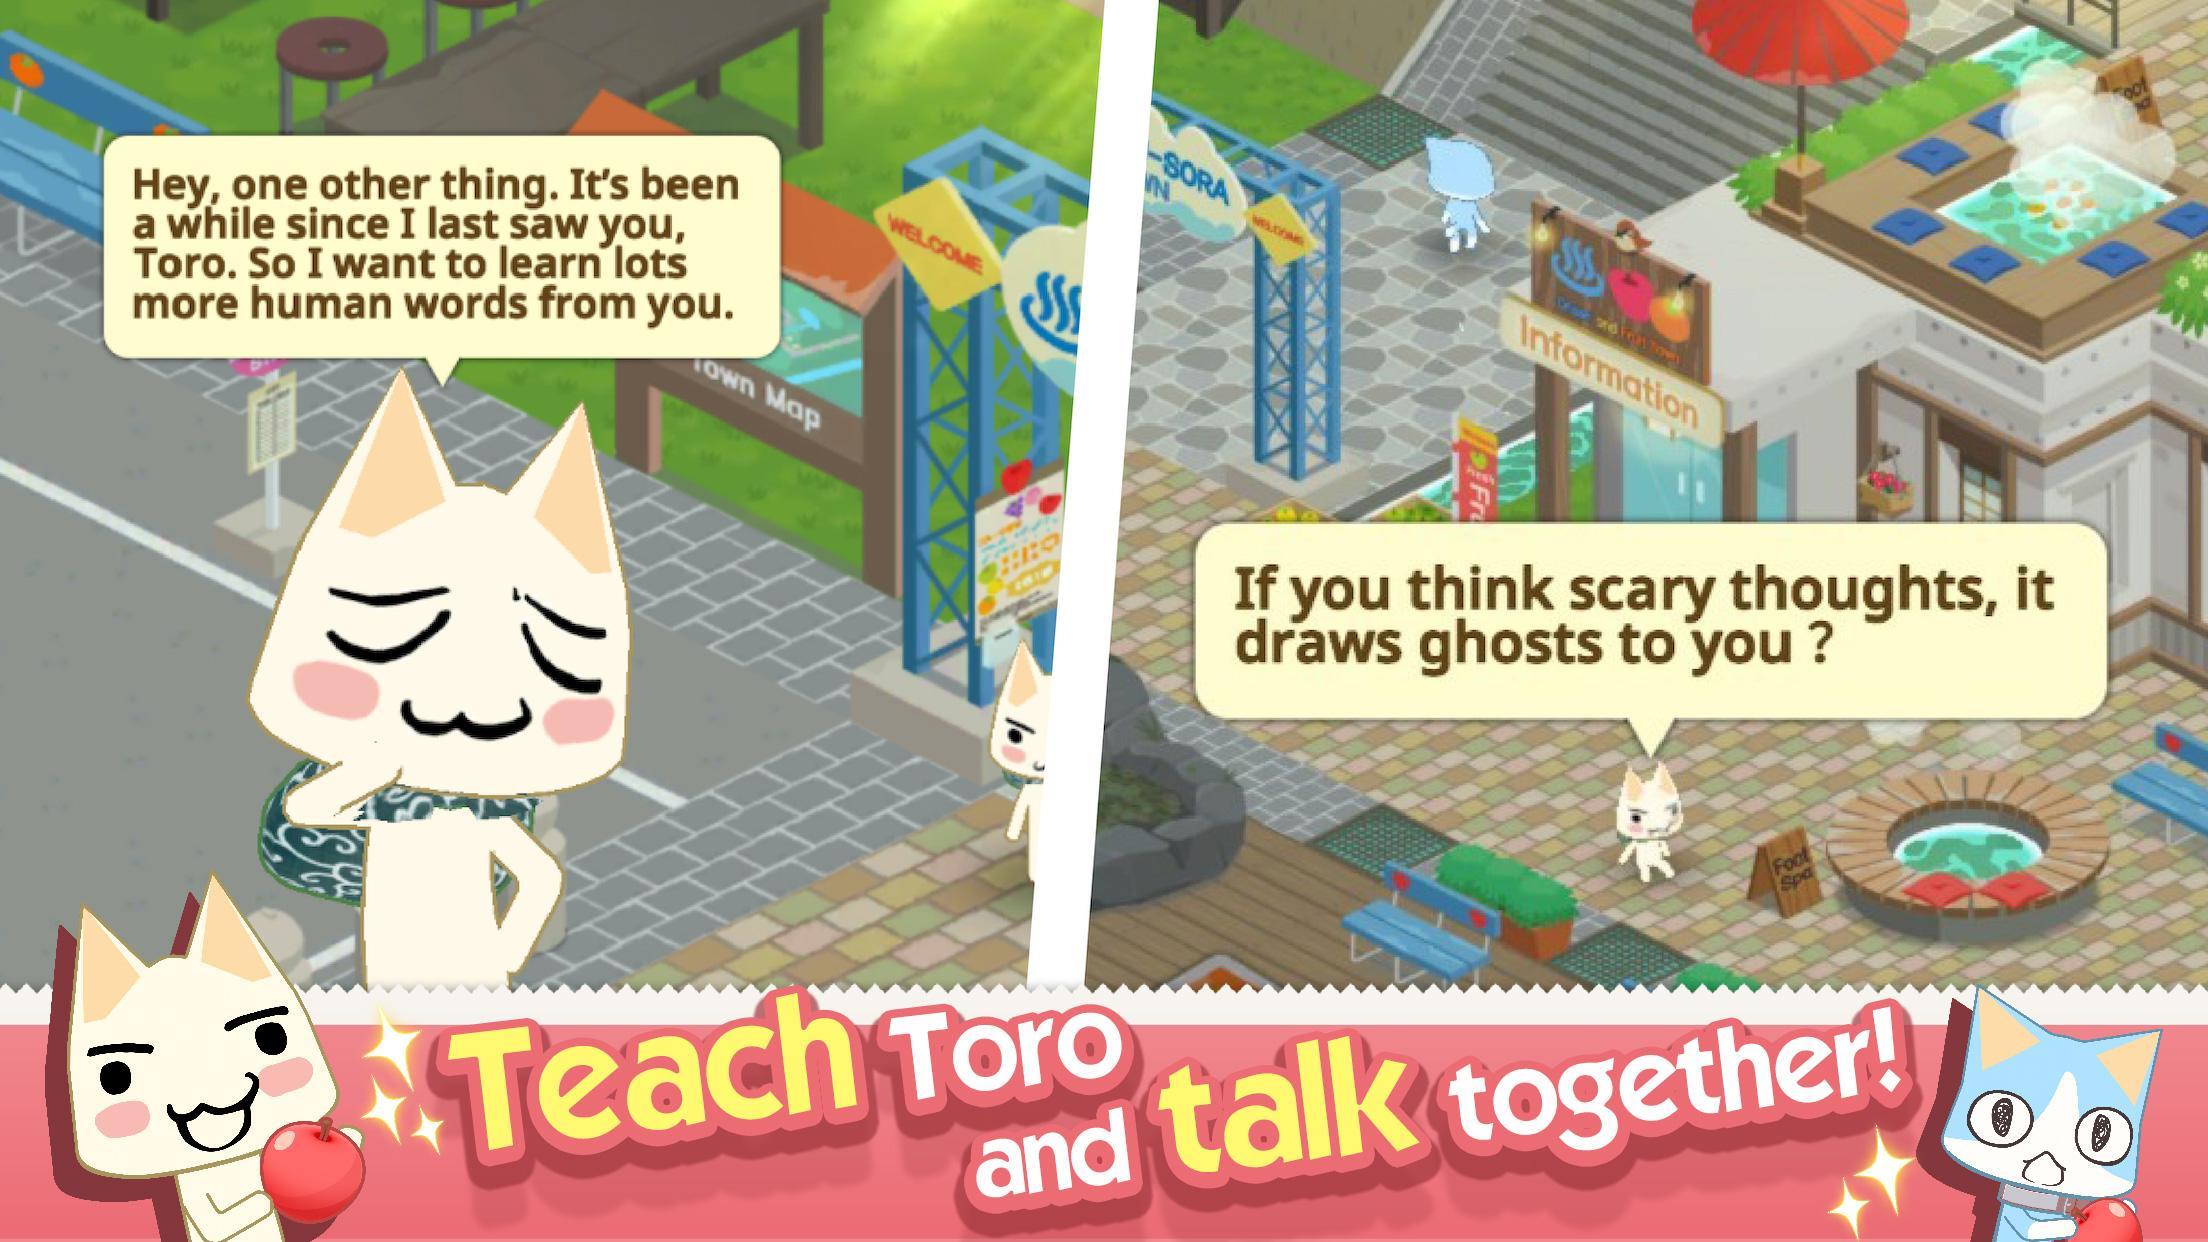 Screenshot of Toro and Friends: Onsen Town